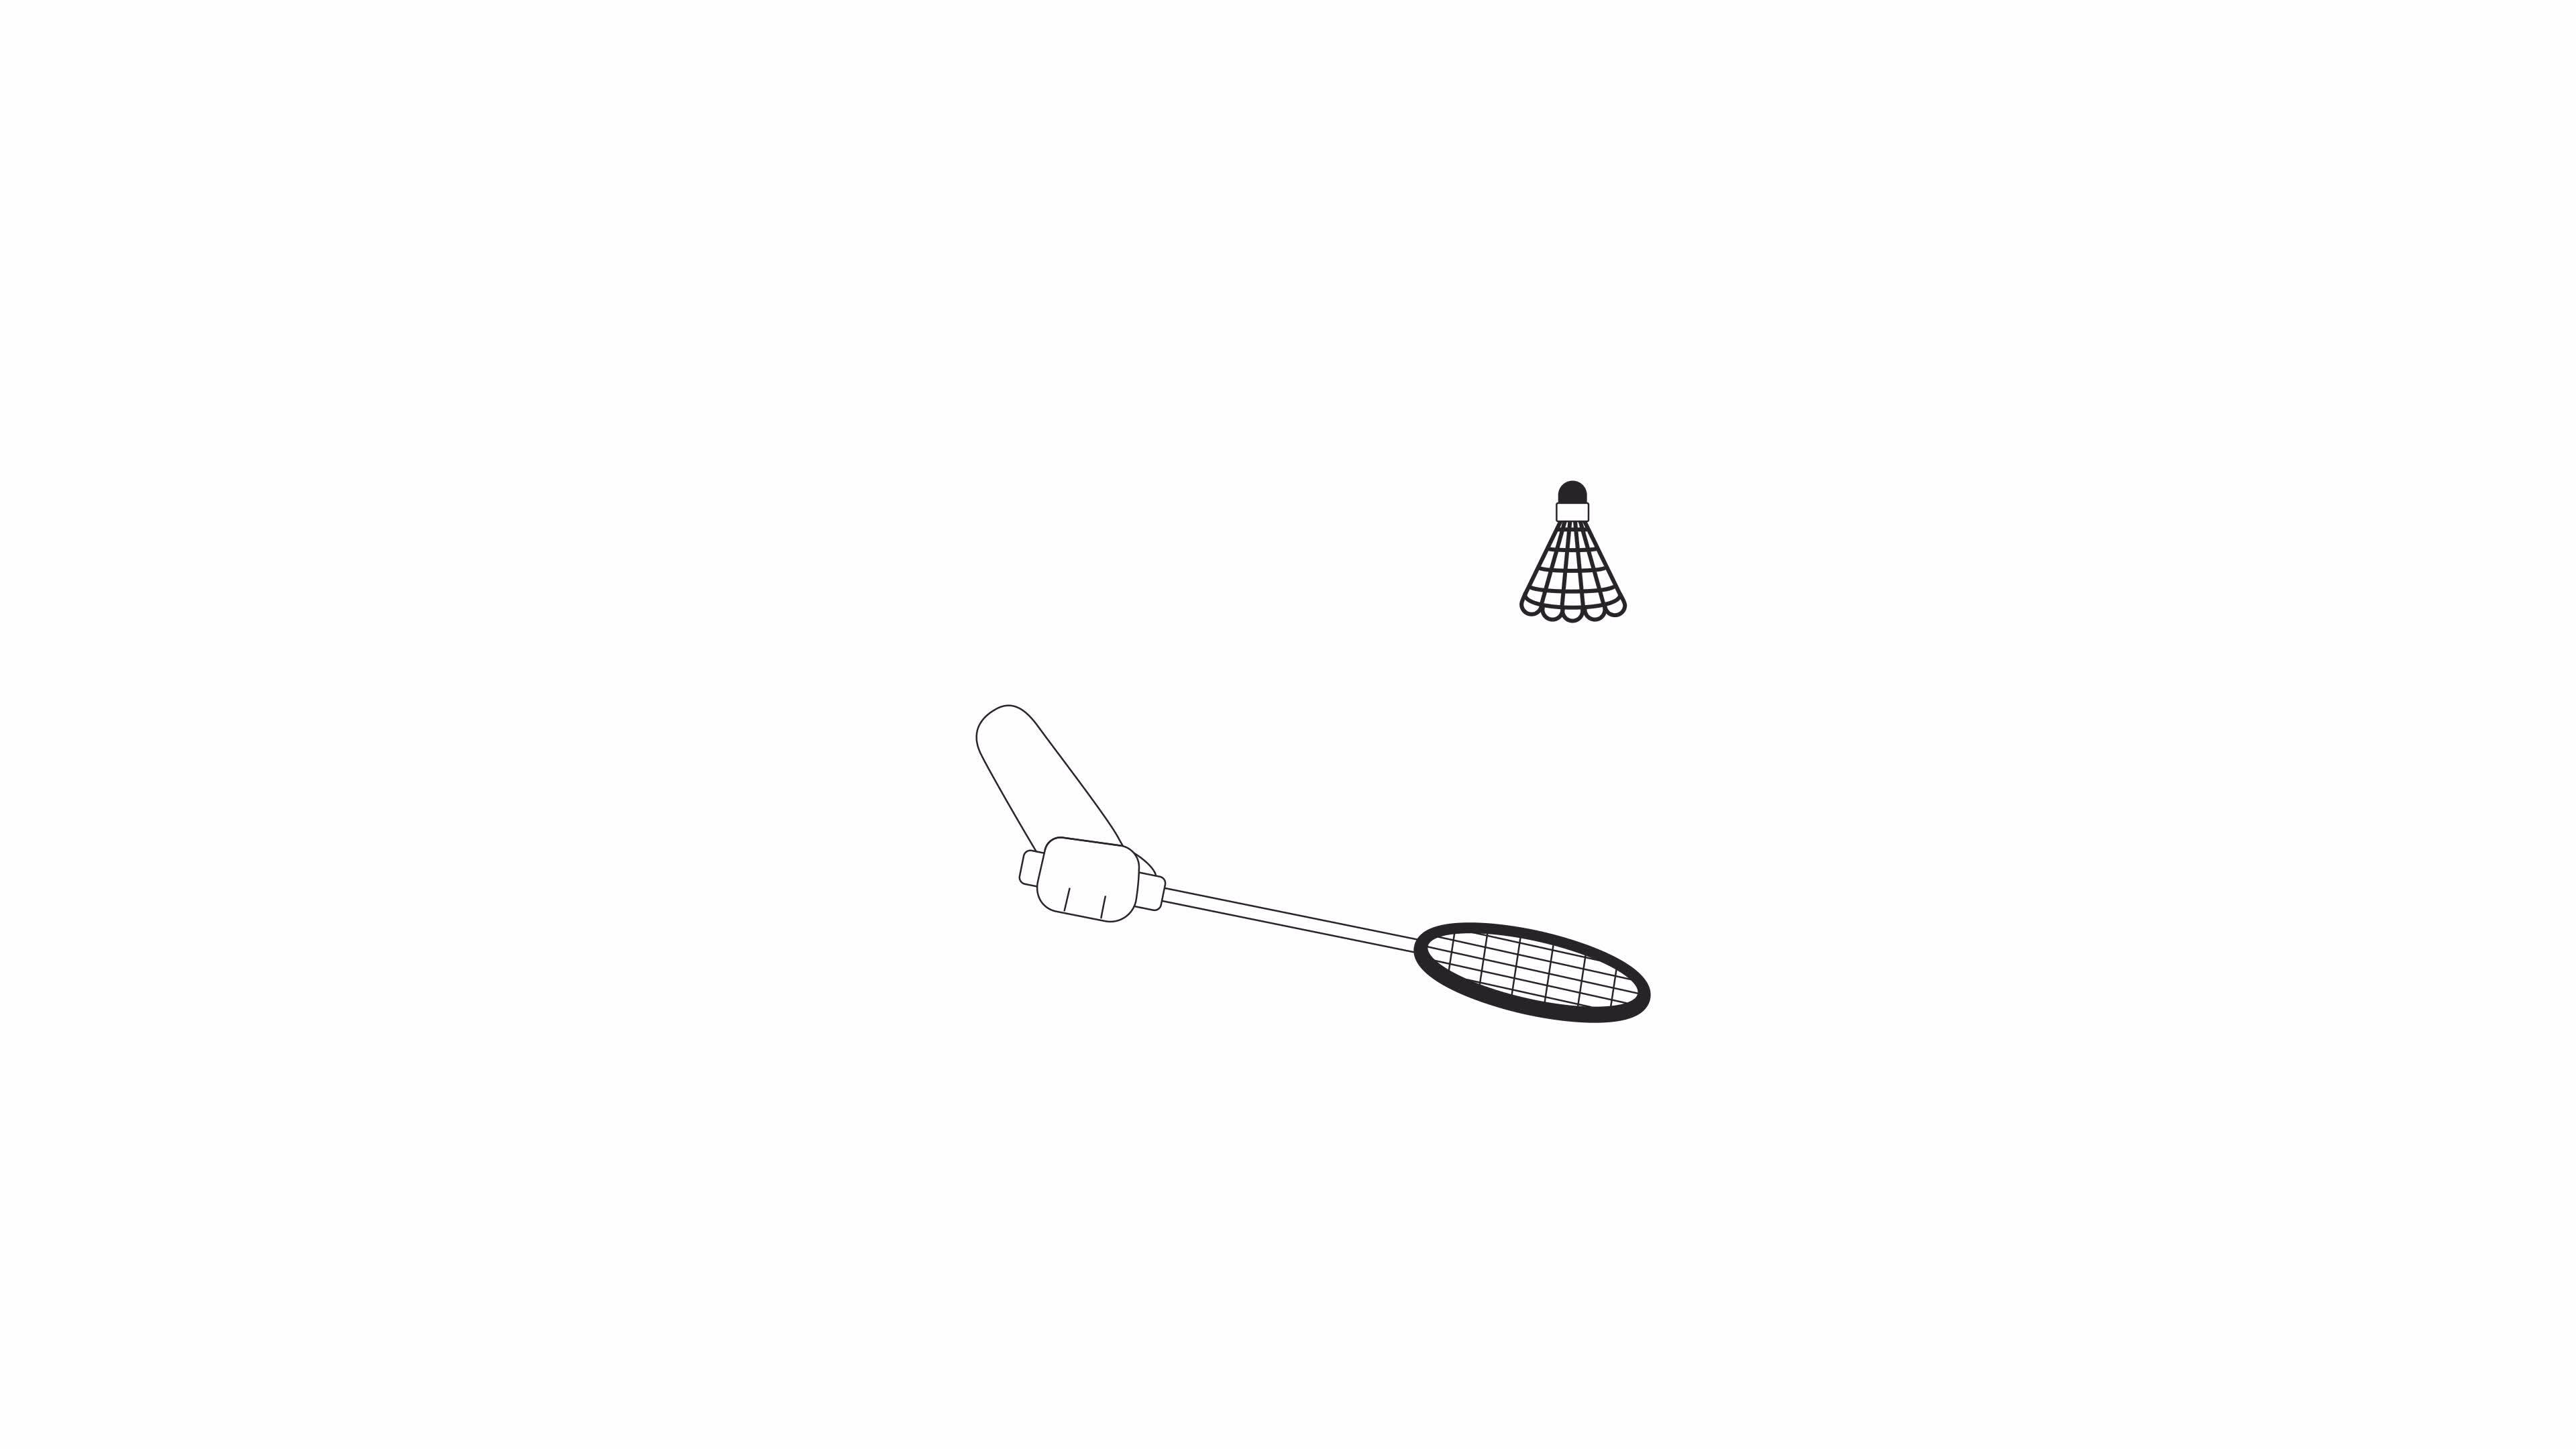 Shuttlecock hitting bw animation. Animated isolated 2D badminton racquet, shuttle